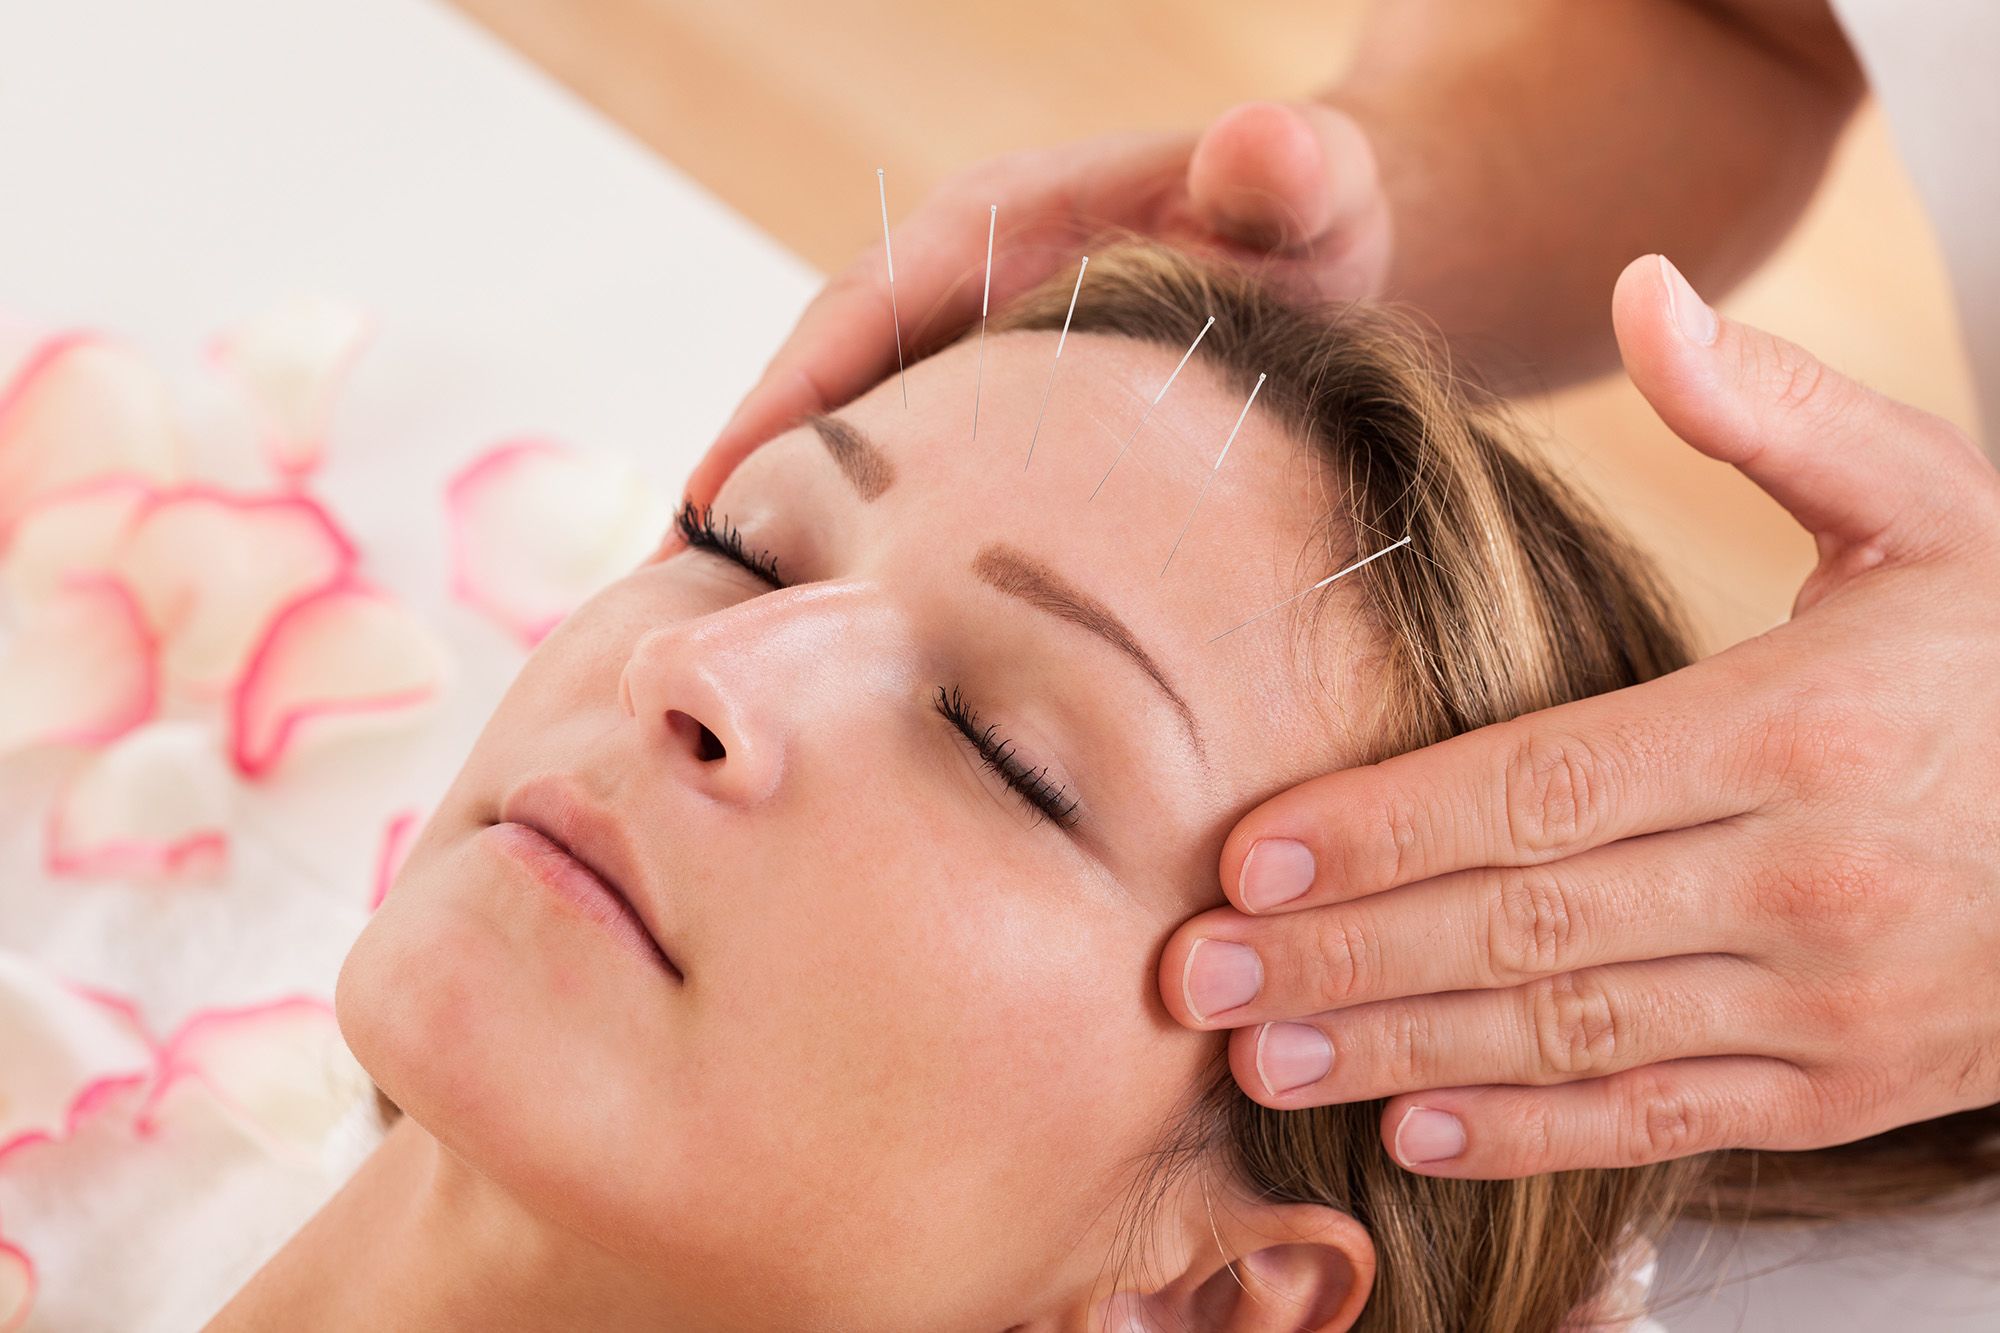 How can massage help my headaches?